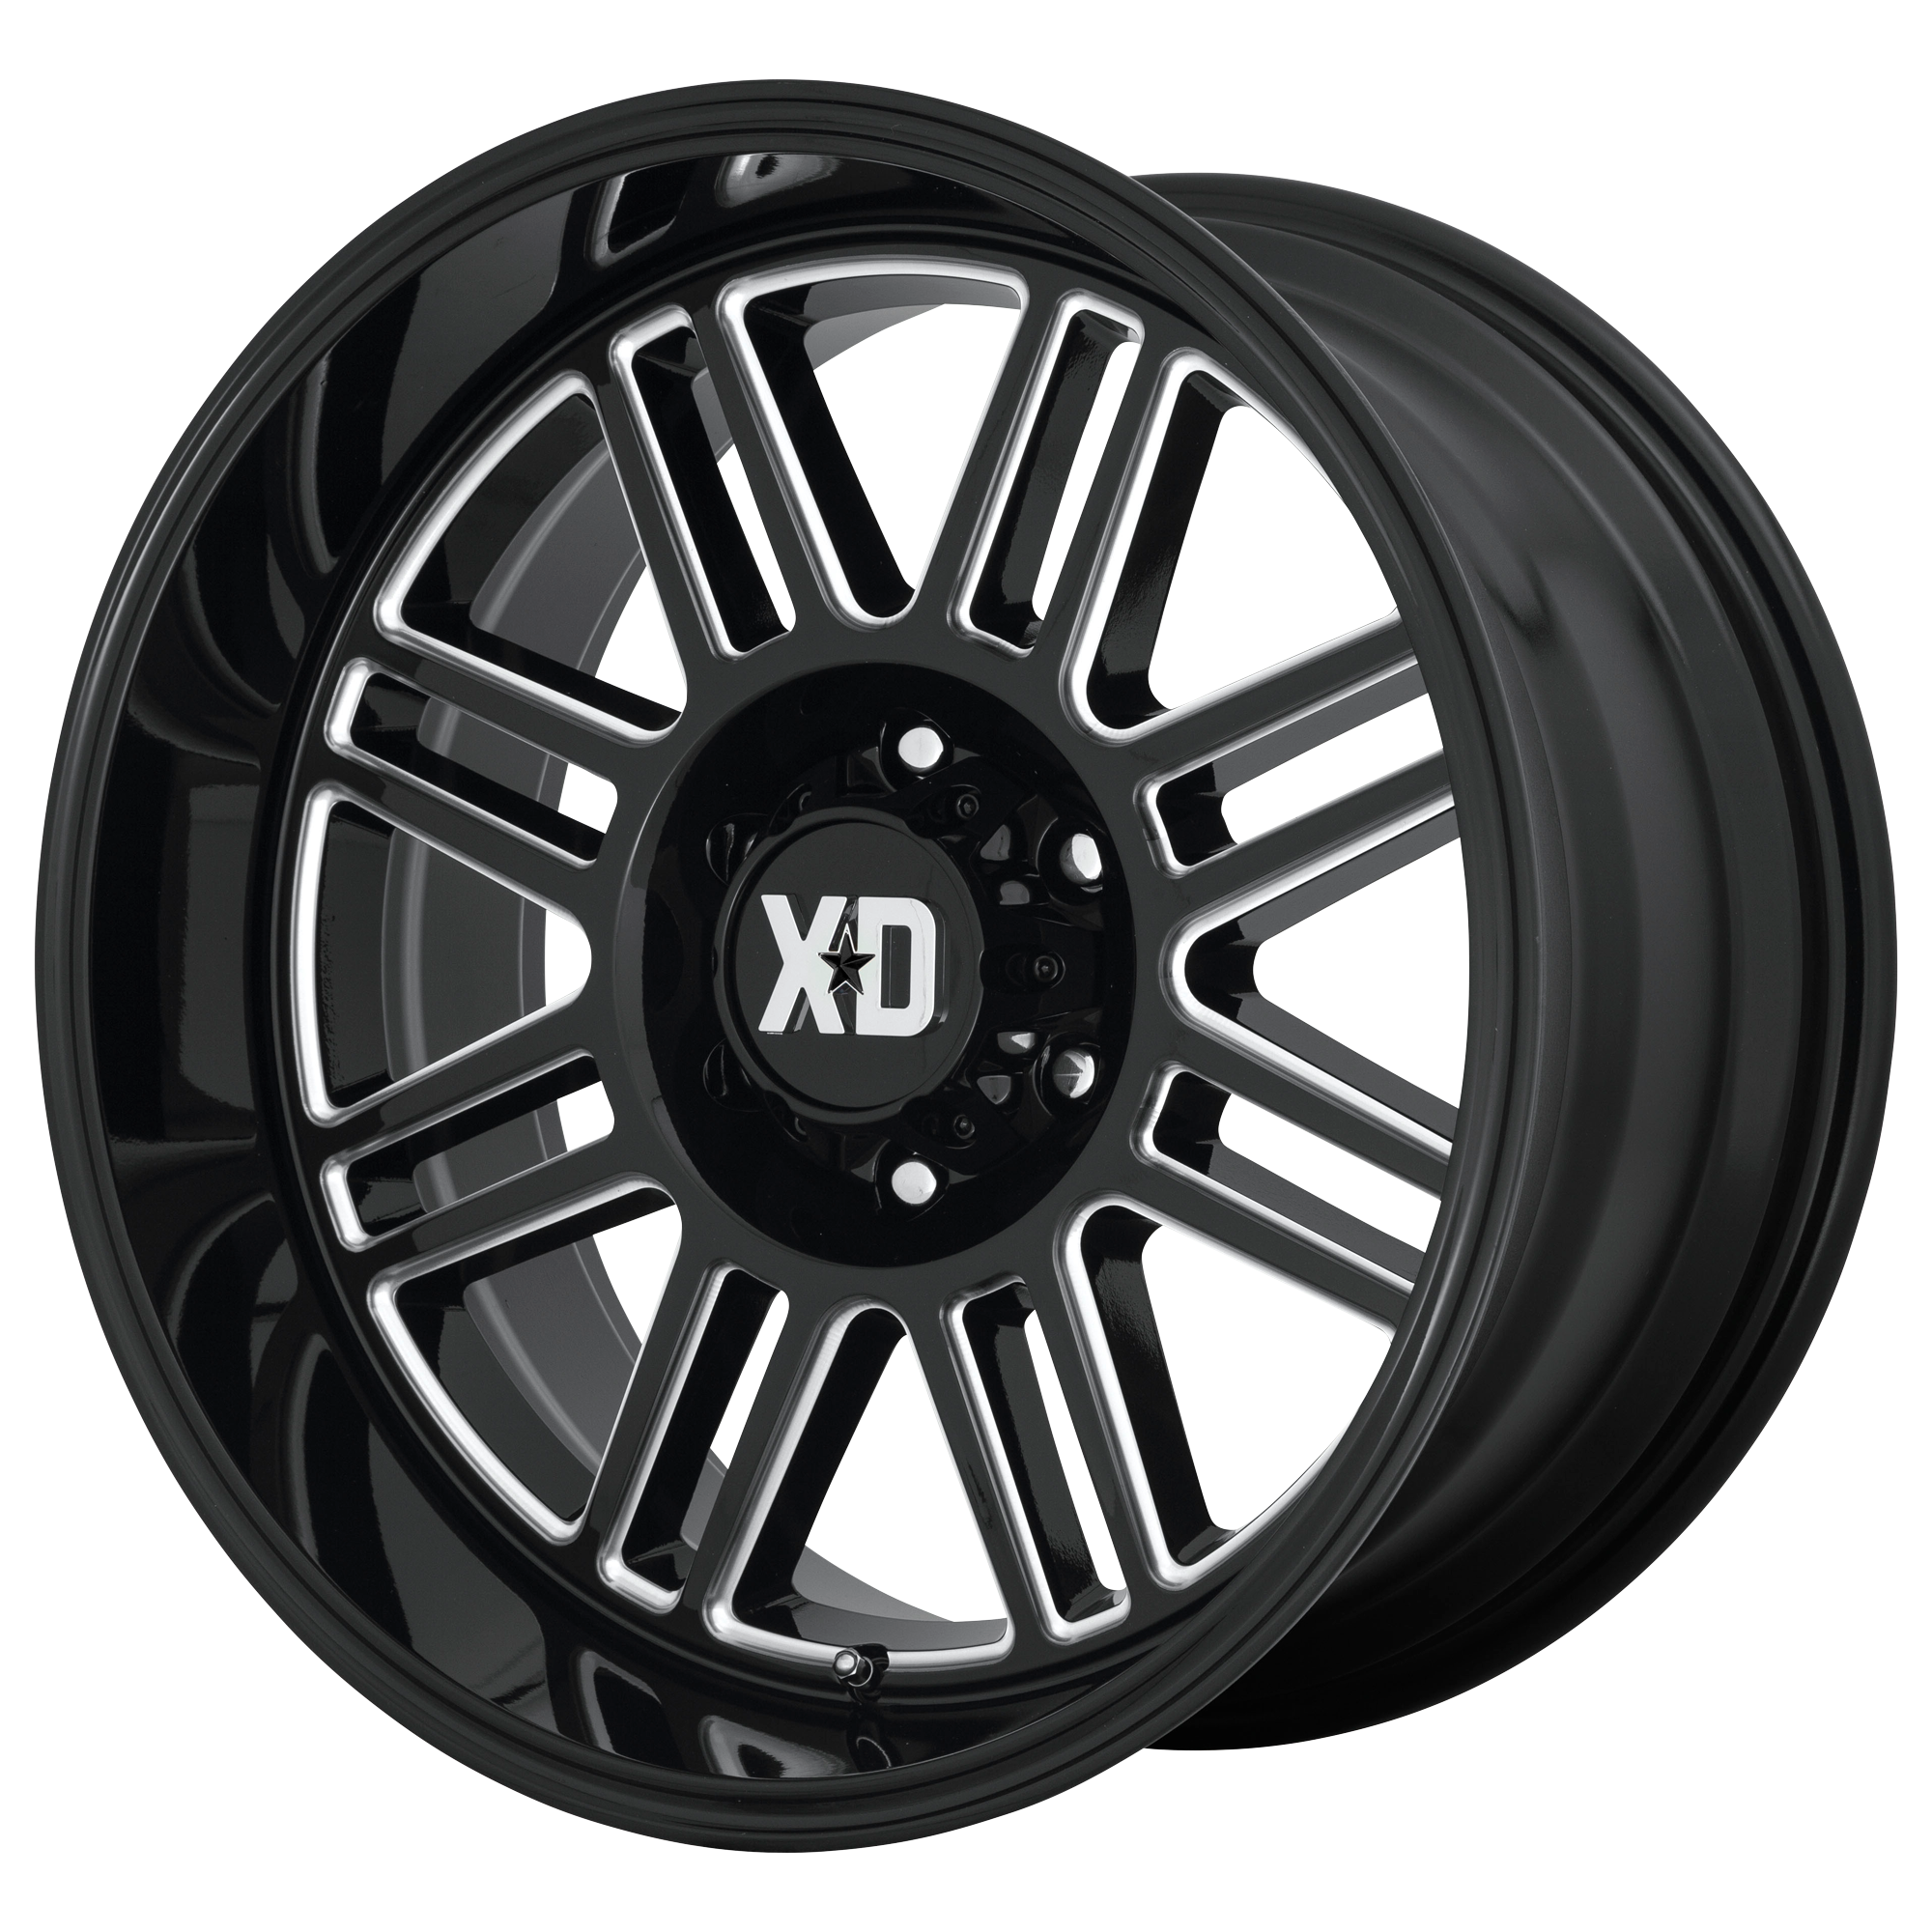 XD 20"x9" Non-Chrome Gloss Black Milled Custom Wheel ARSWCWXD85029068300